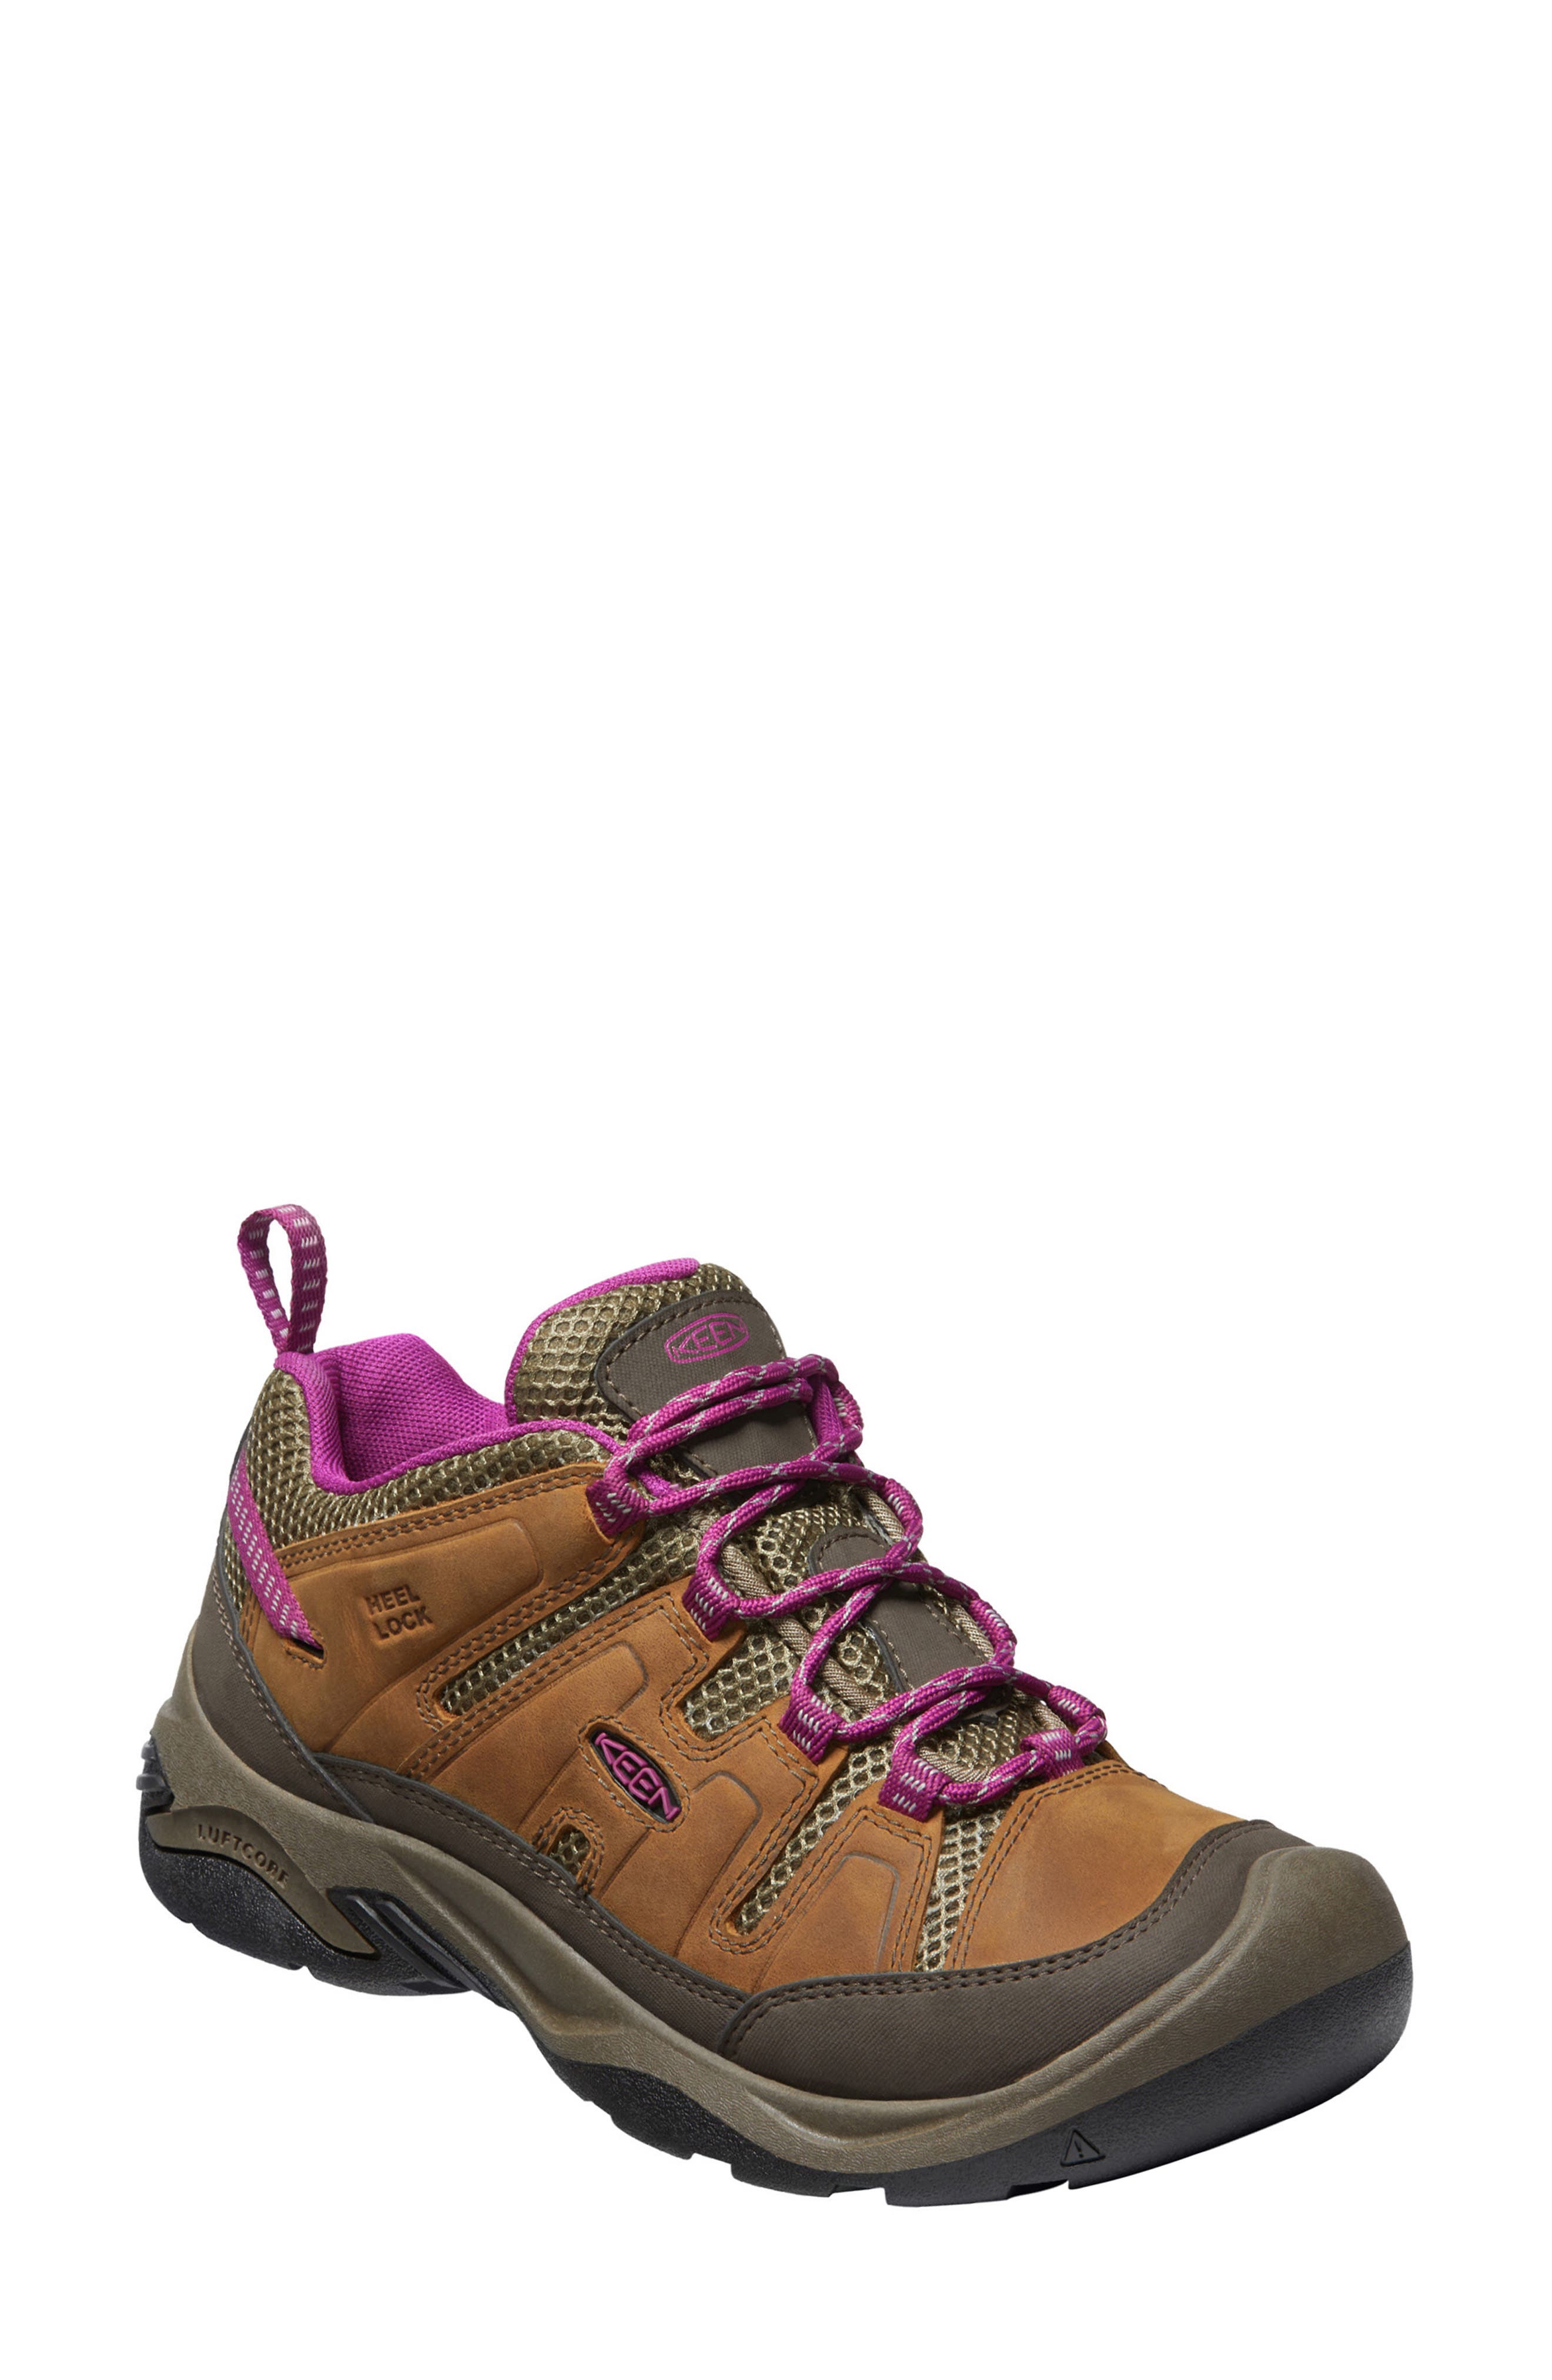 Keen Footwear shoes Chaussures femmes 1012236 sneaker a86 tr purple heart violet gris O 